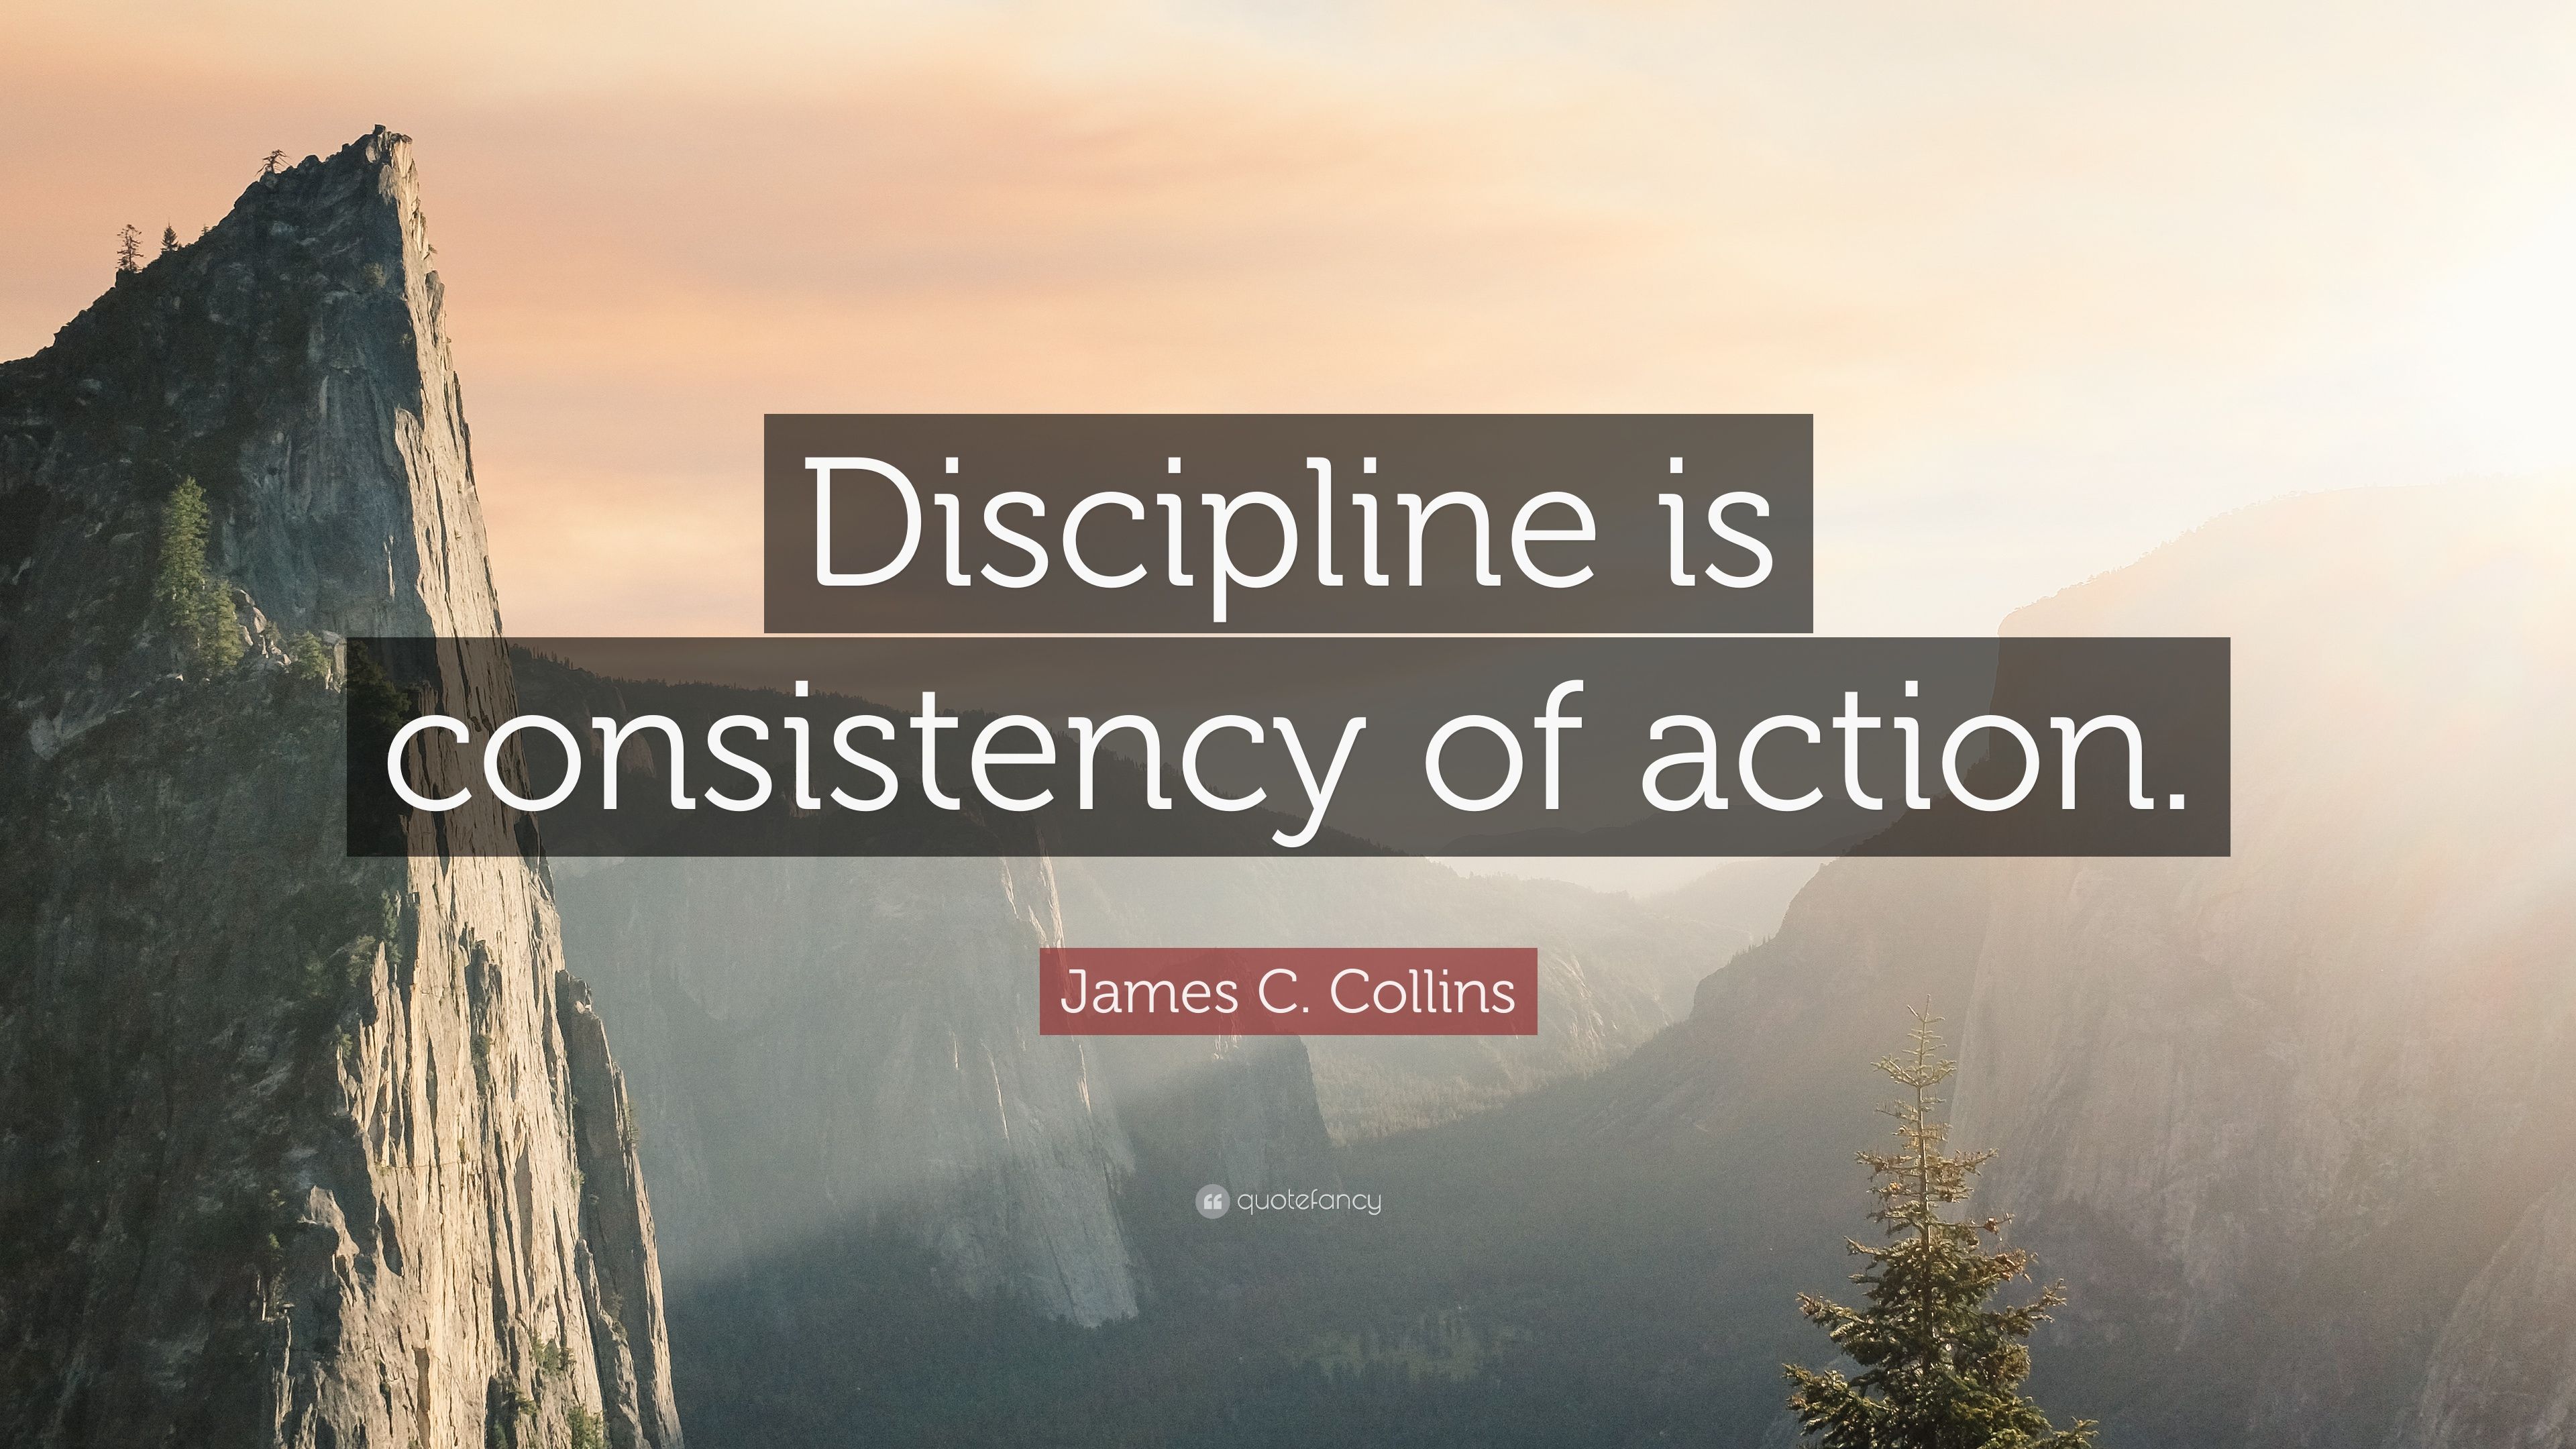 James C. Collins Quote: “Discipline is consistency of action.” (7 wallpaper)